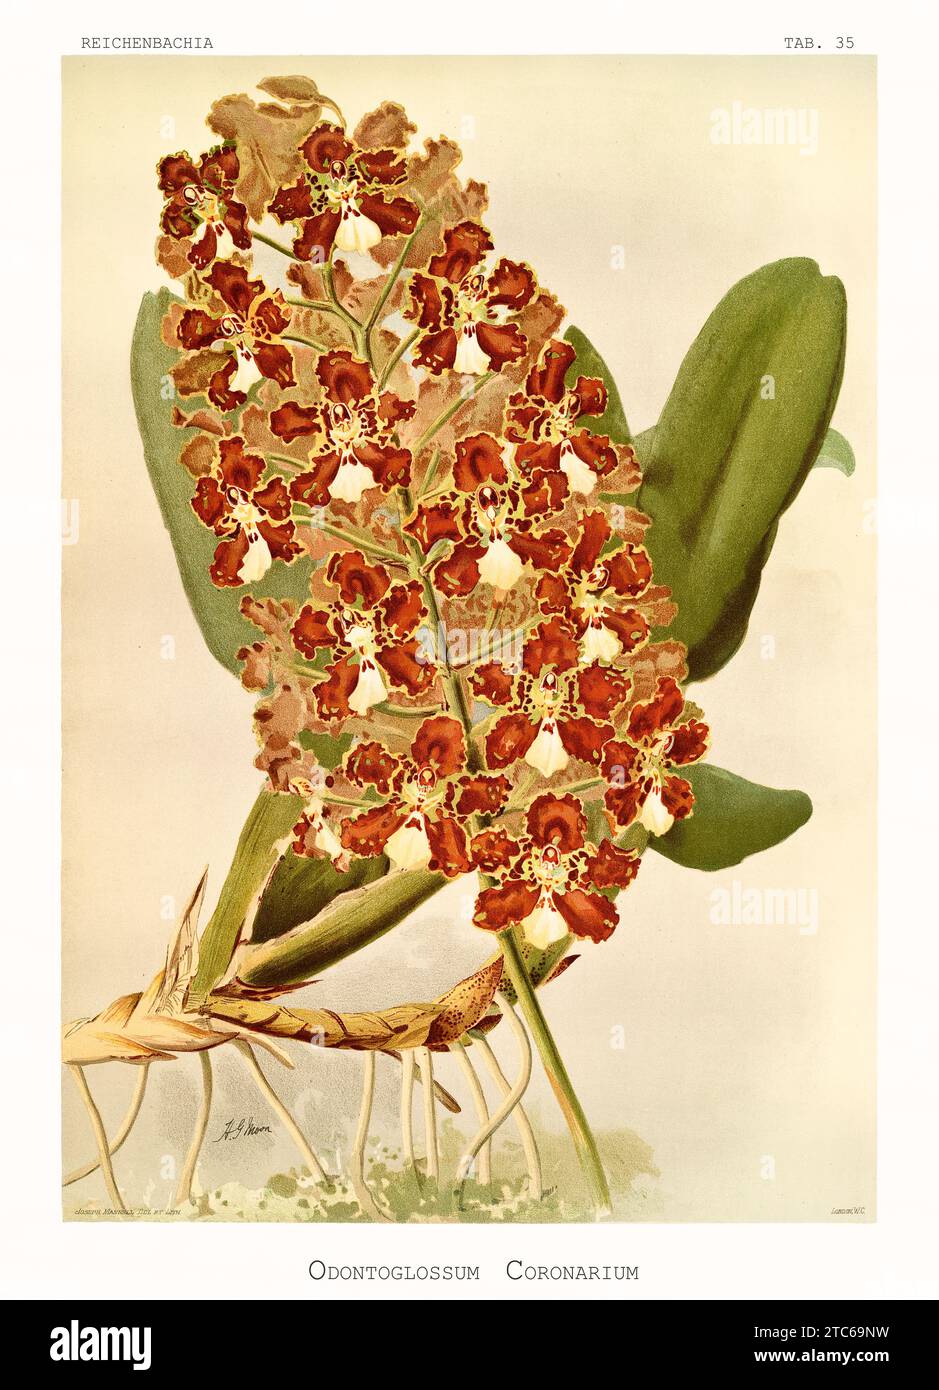 Old illustration of Oncidium candelabrum. Reichenbachia, by F. Sander. St. Albans, UK, 1888 - 1894 Stock Photo